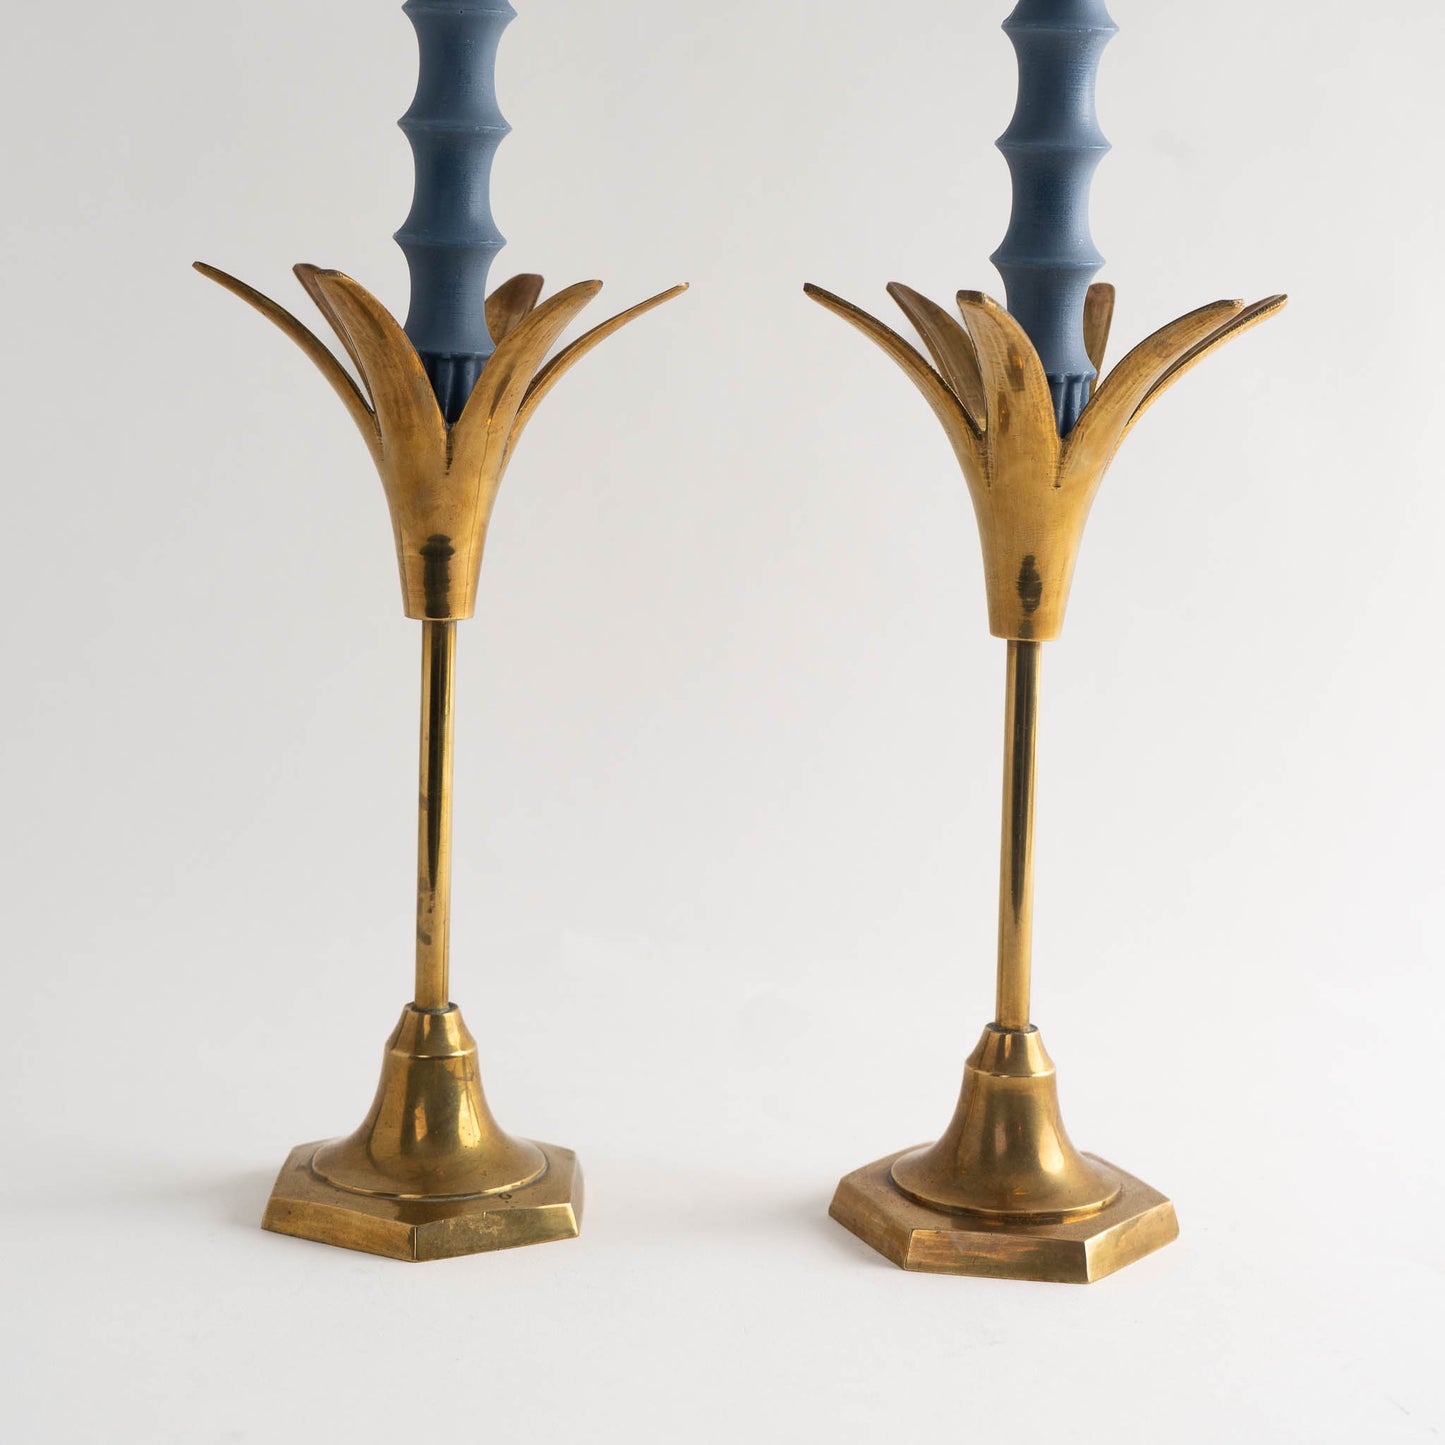 Vintage Brass Pineapple Candlestick Holders - Pair